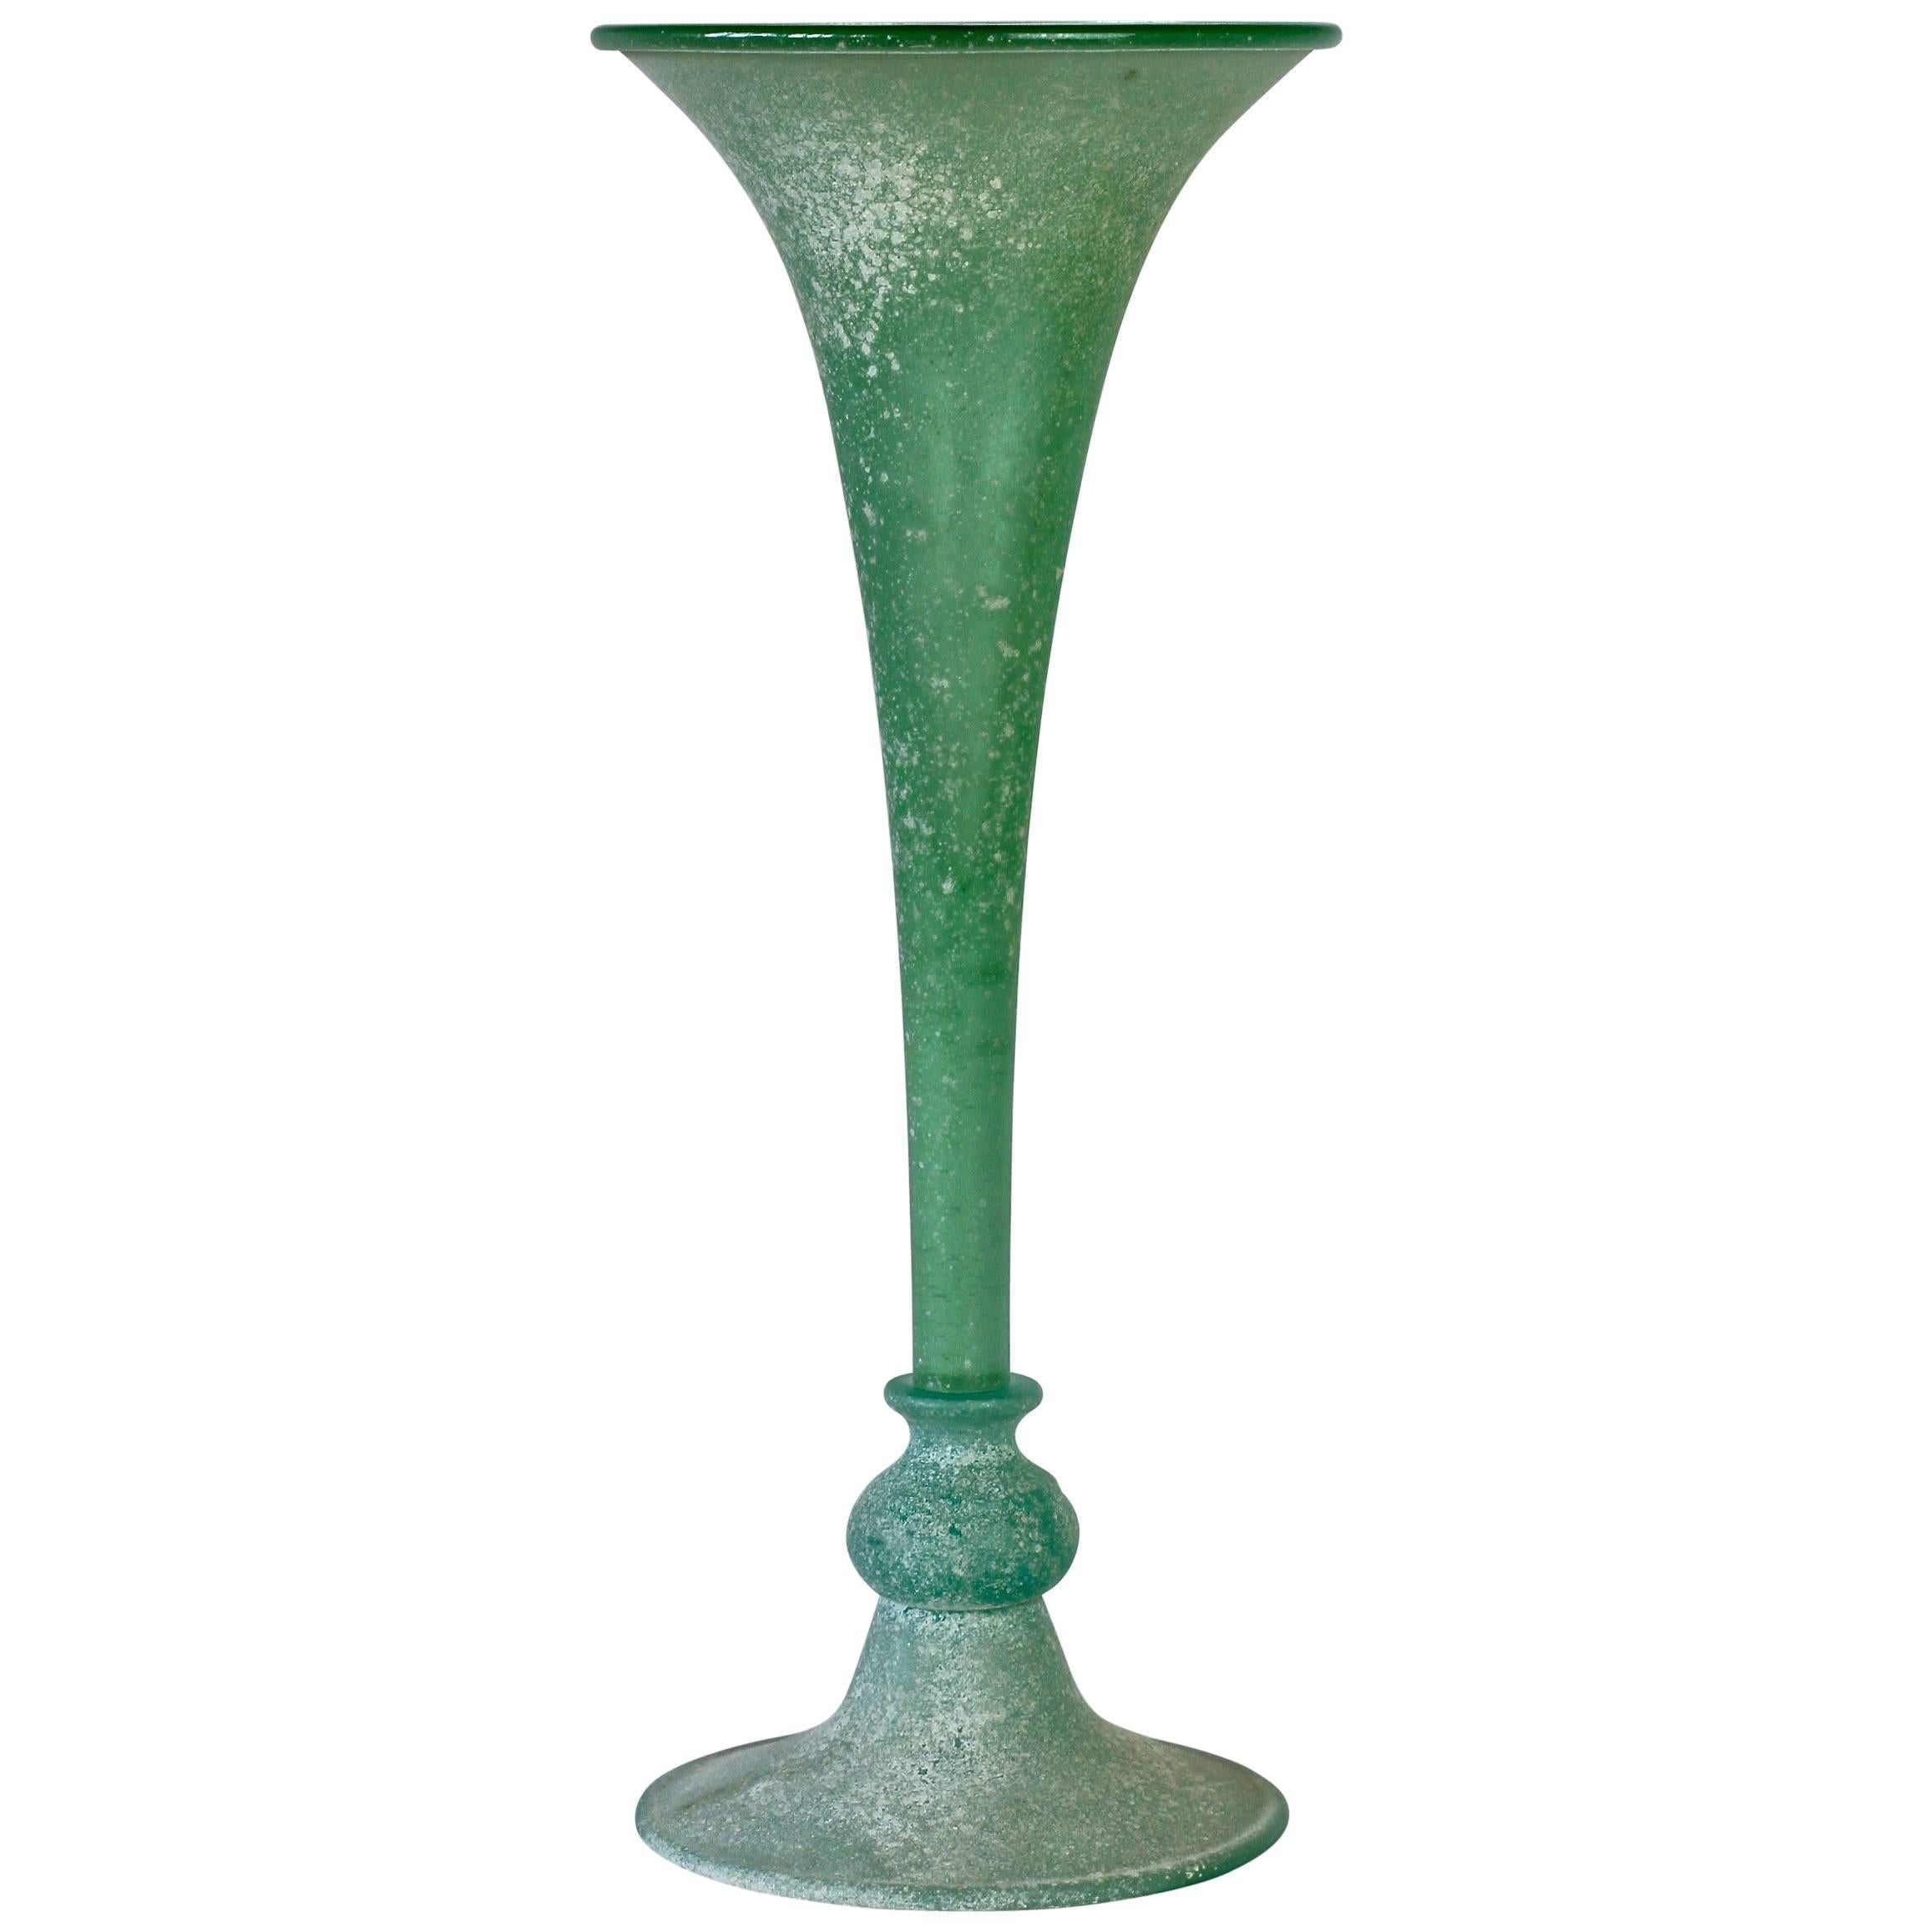 Grand vase cannelé en verre de Murano vert « A Scavo » attribué à Seguso Vetri d'Arte